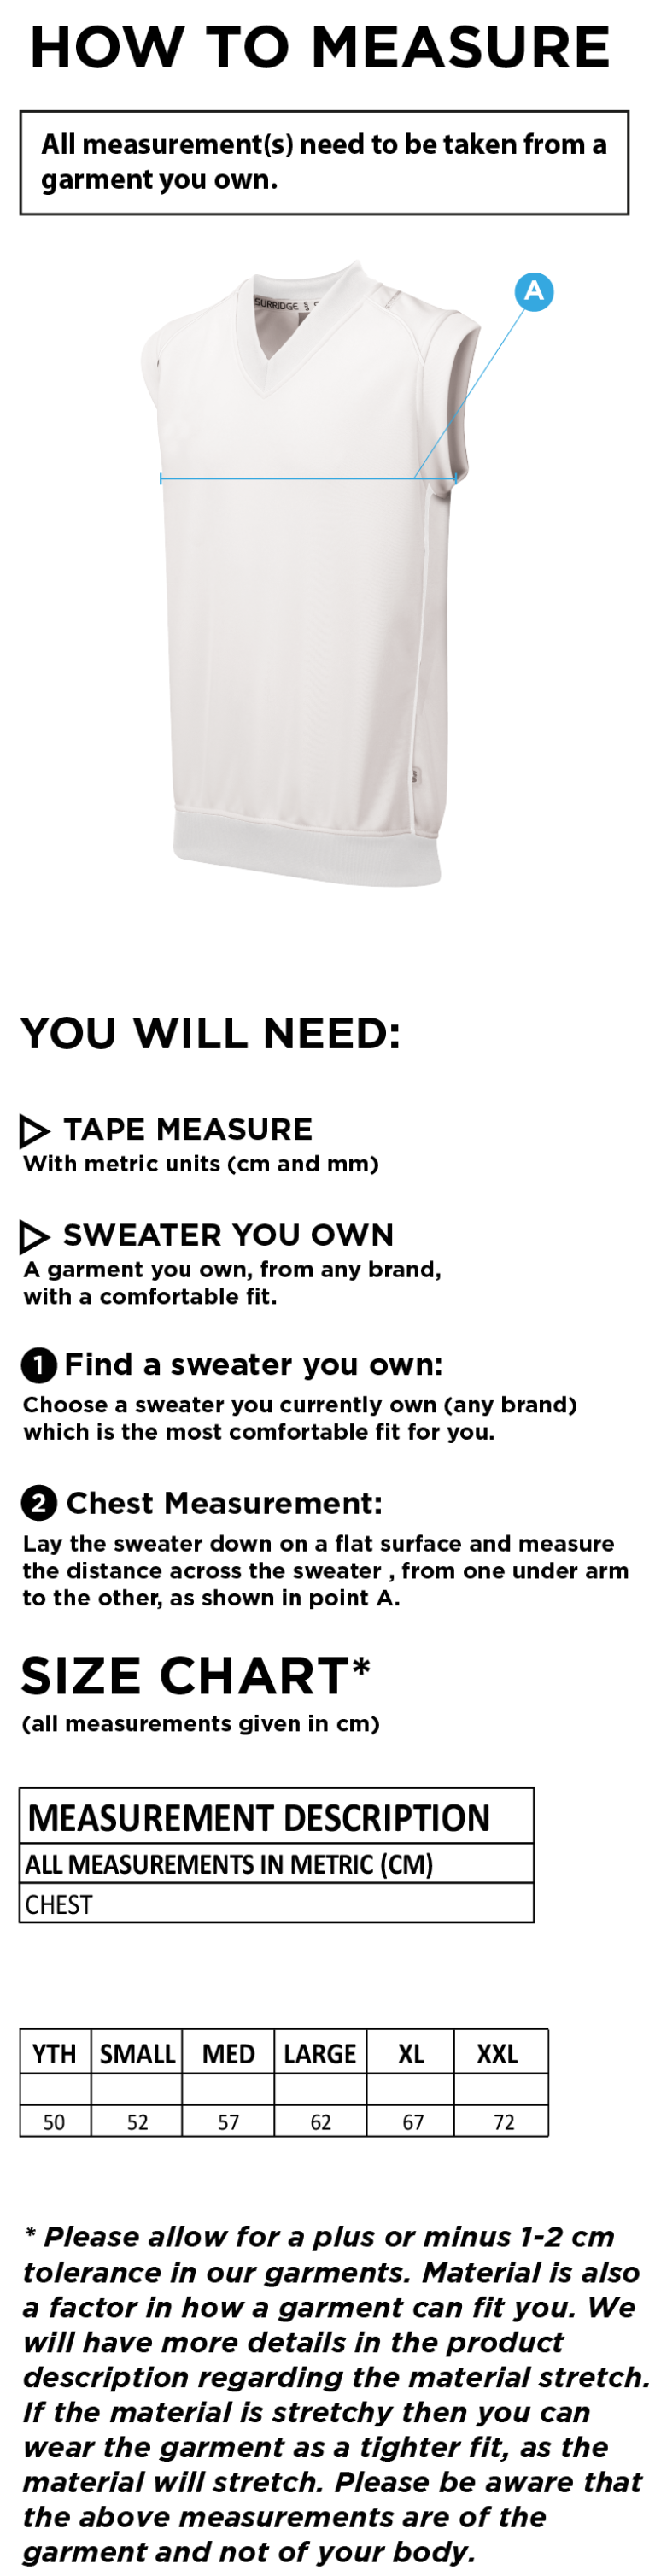 Maori Oxshott CC - Curve Sleeveless Sweater - Size Guide